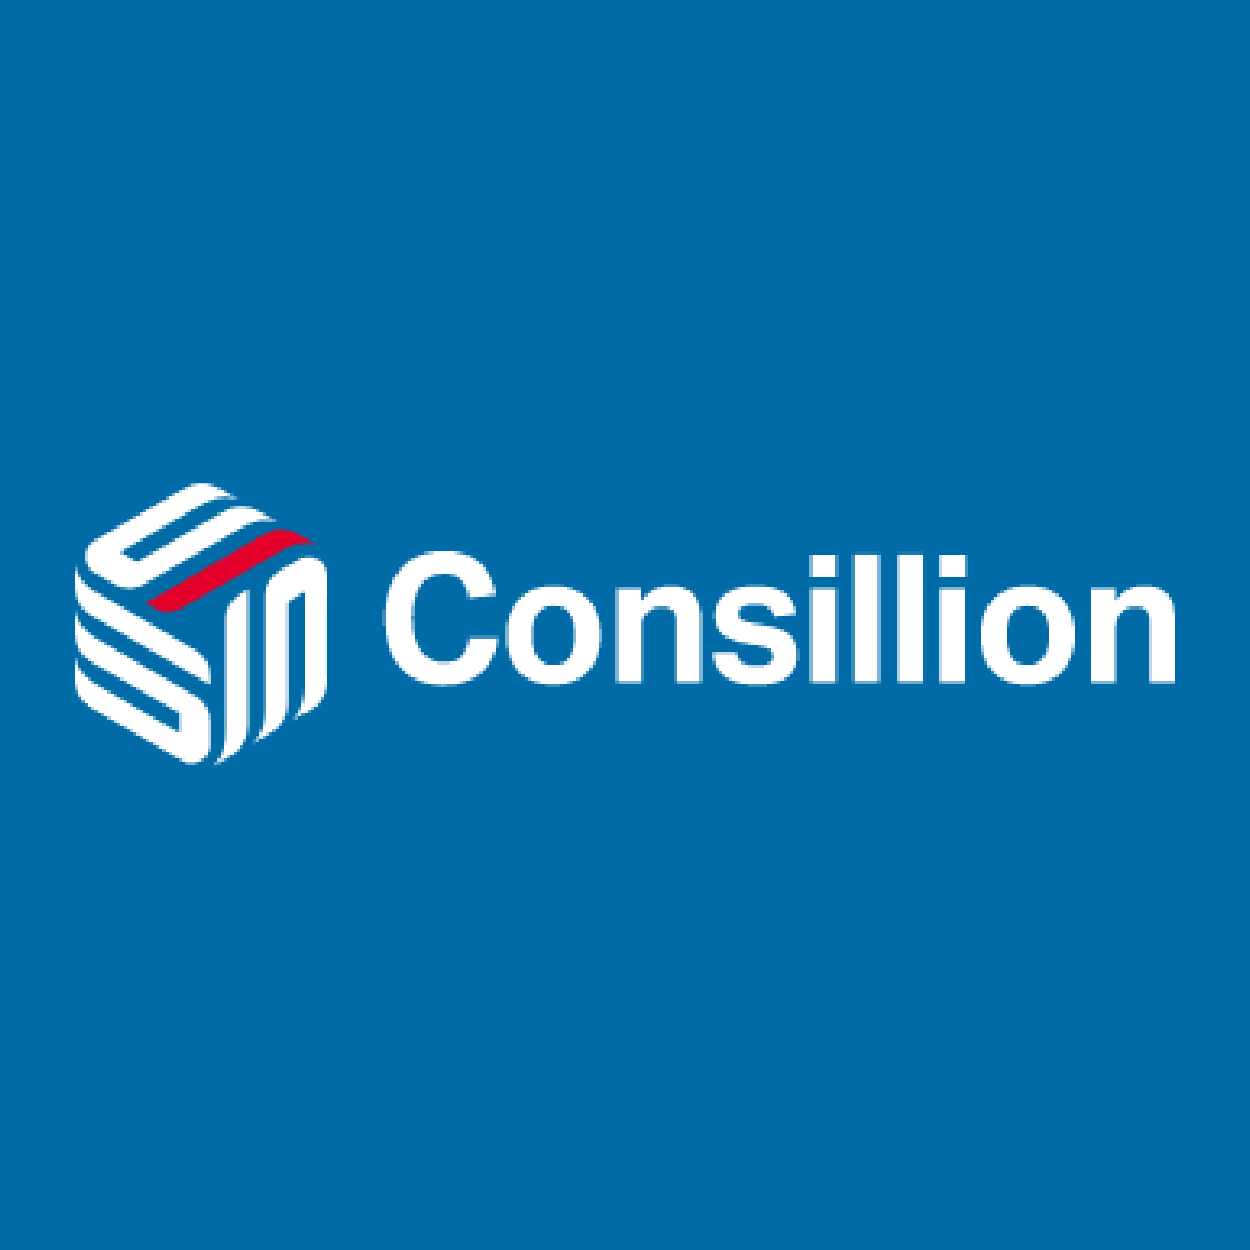 Consillion square logo